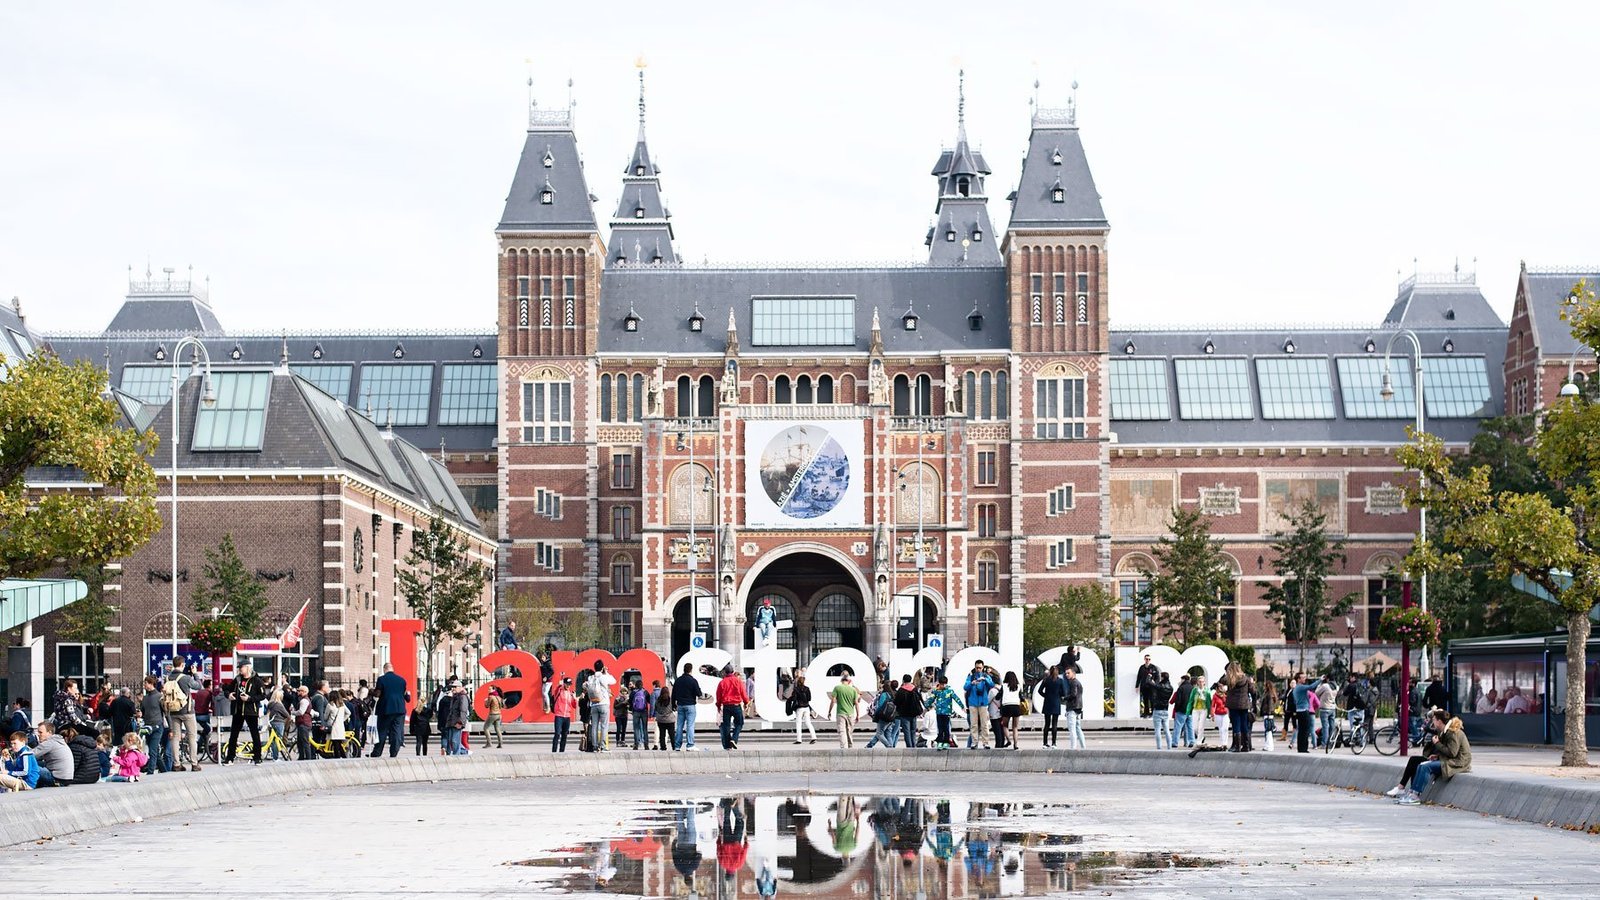 My 5 new favorite places in Amsterdam - Rijksmuseum Iamsterdam